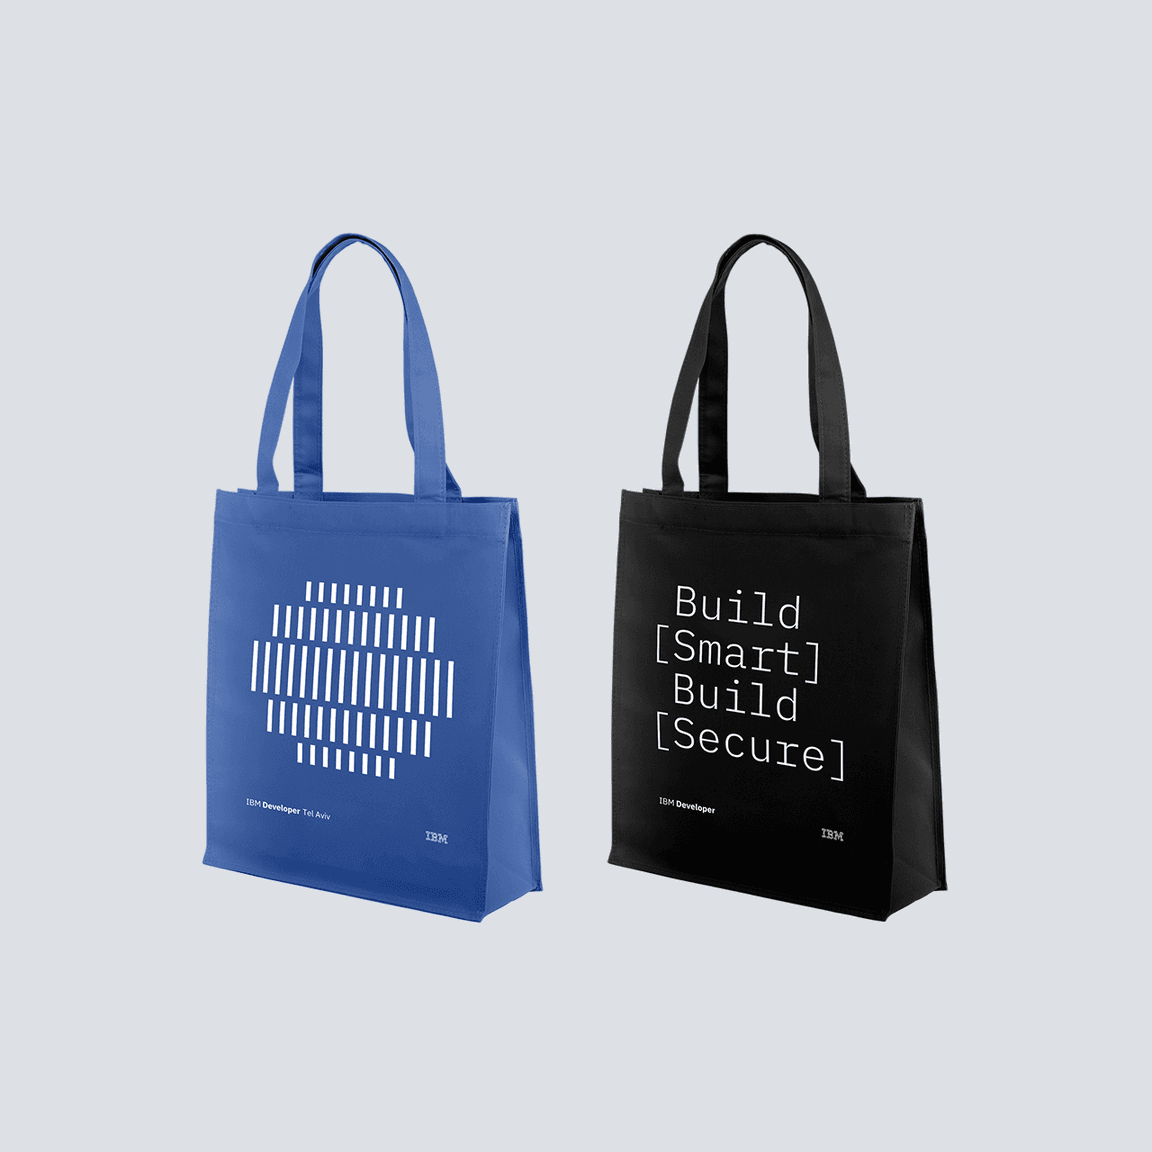 Blue and black IBM Developer tote bags